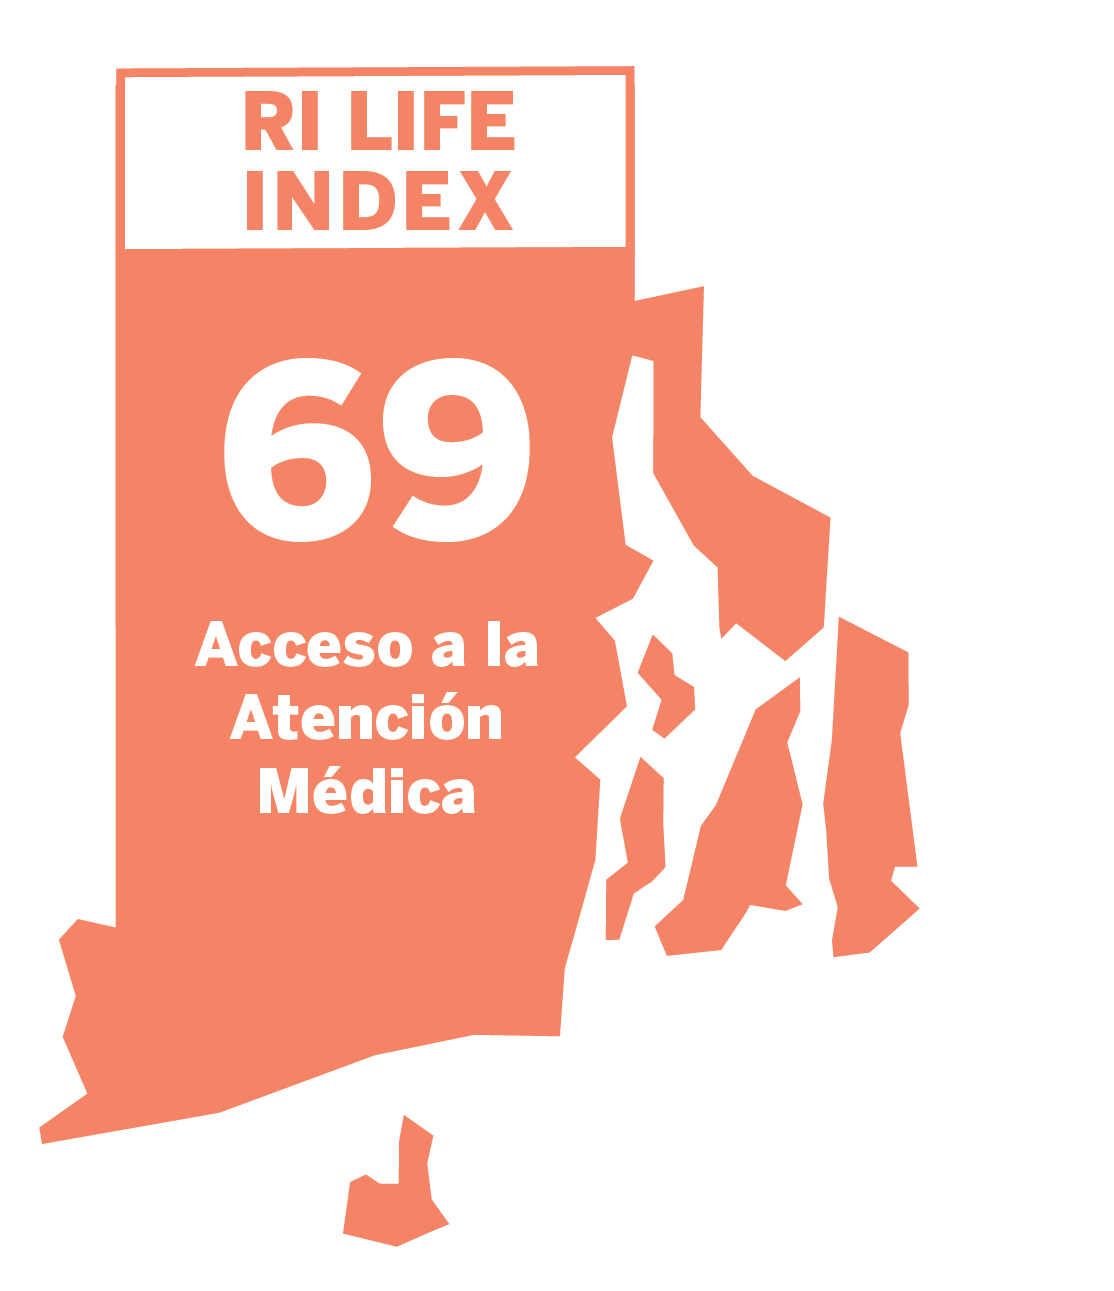 Healthcare Access: 69